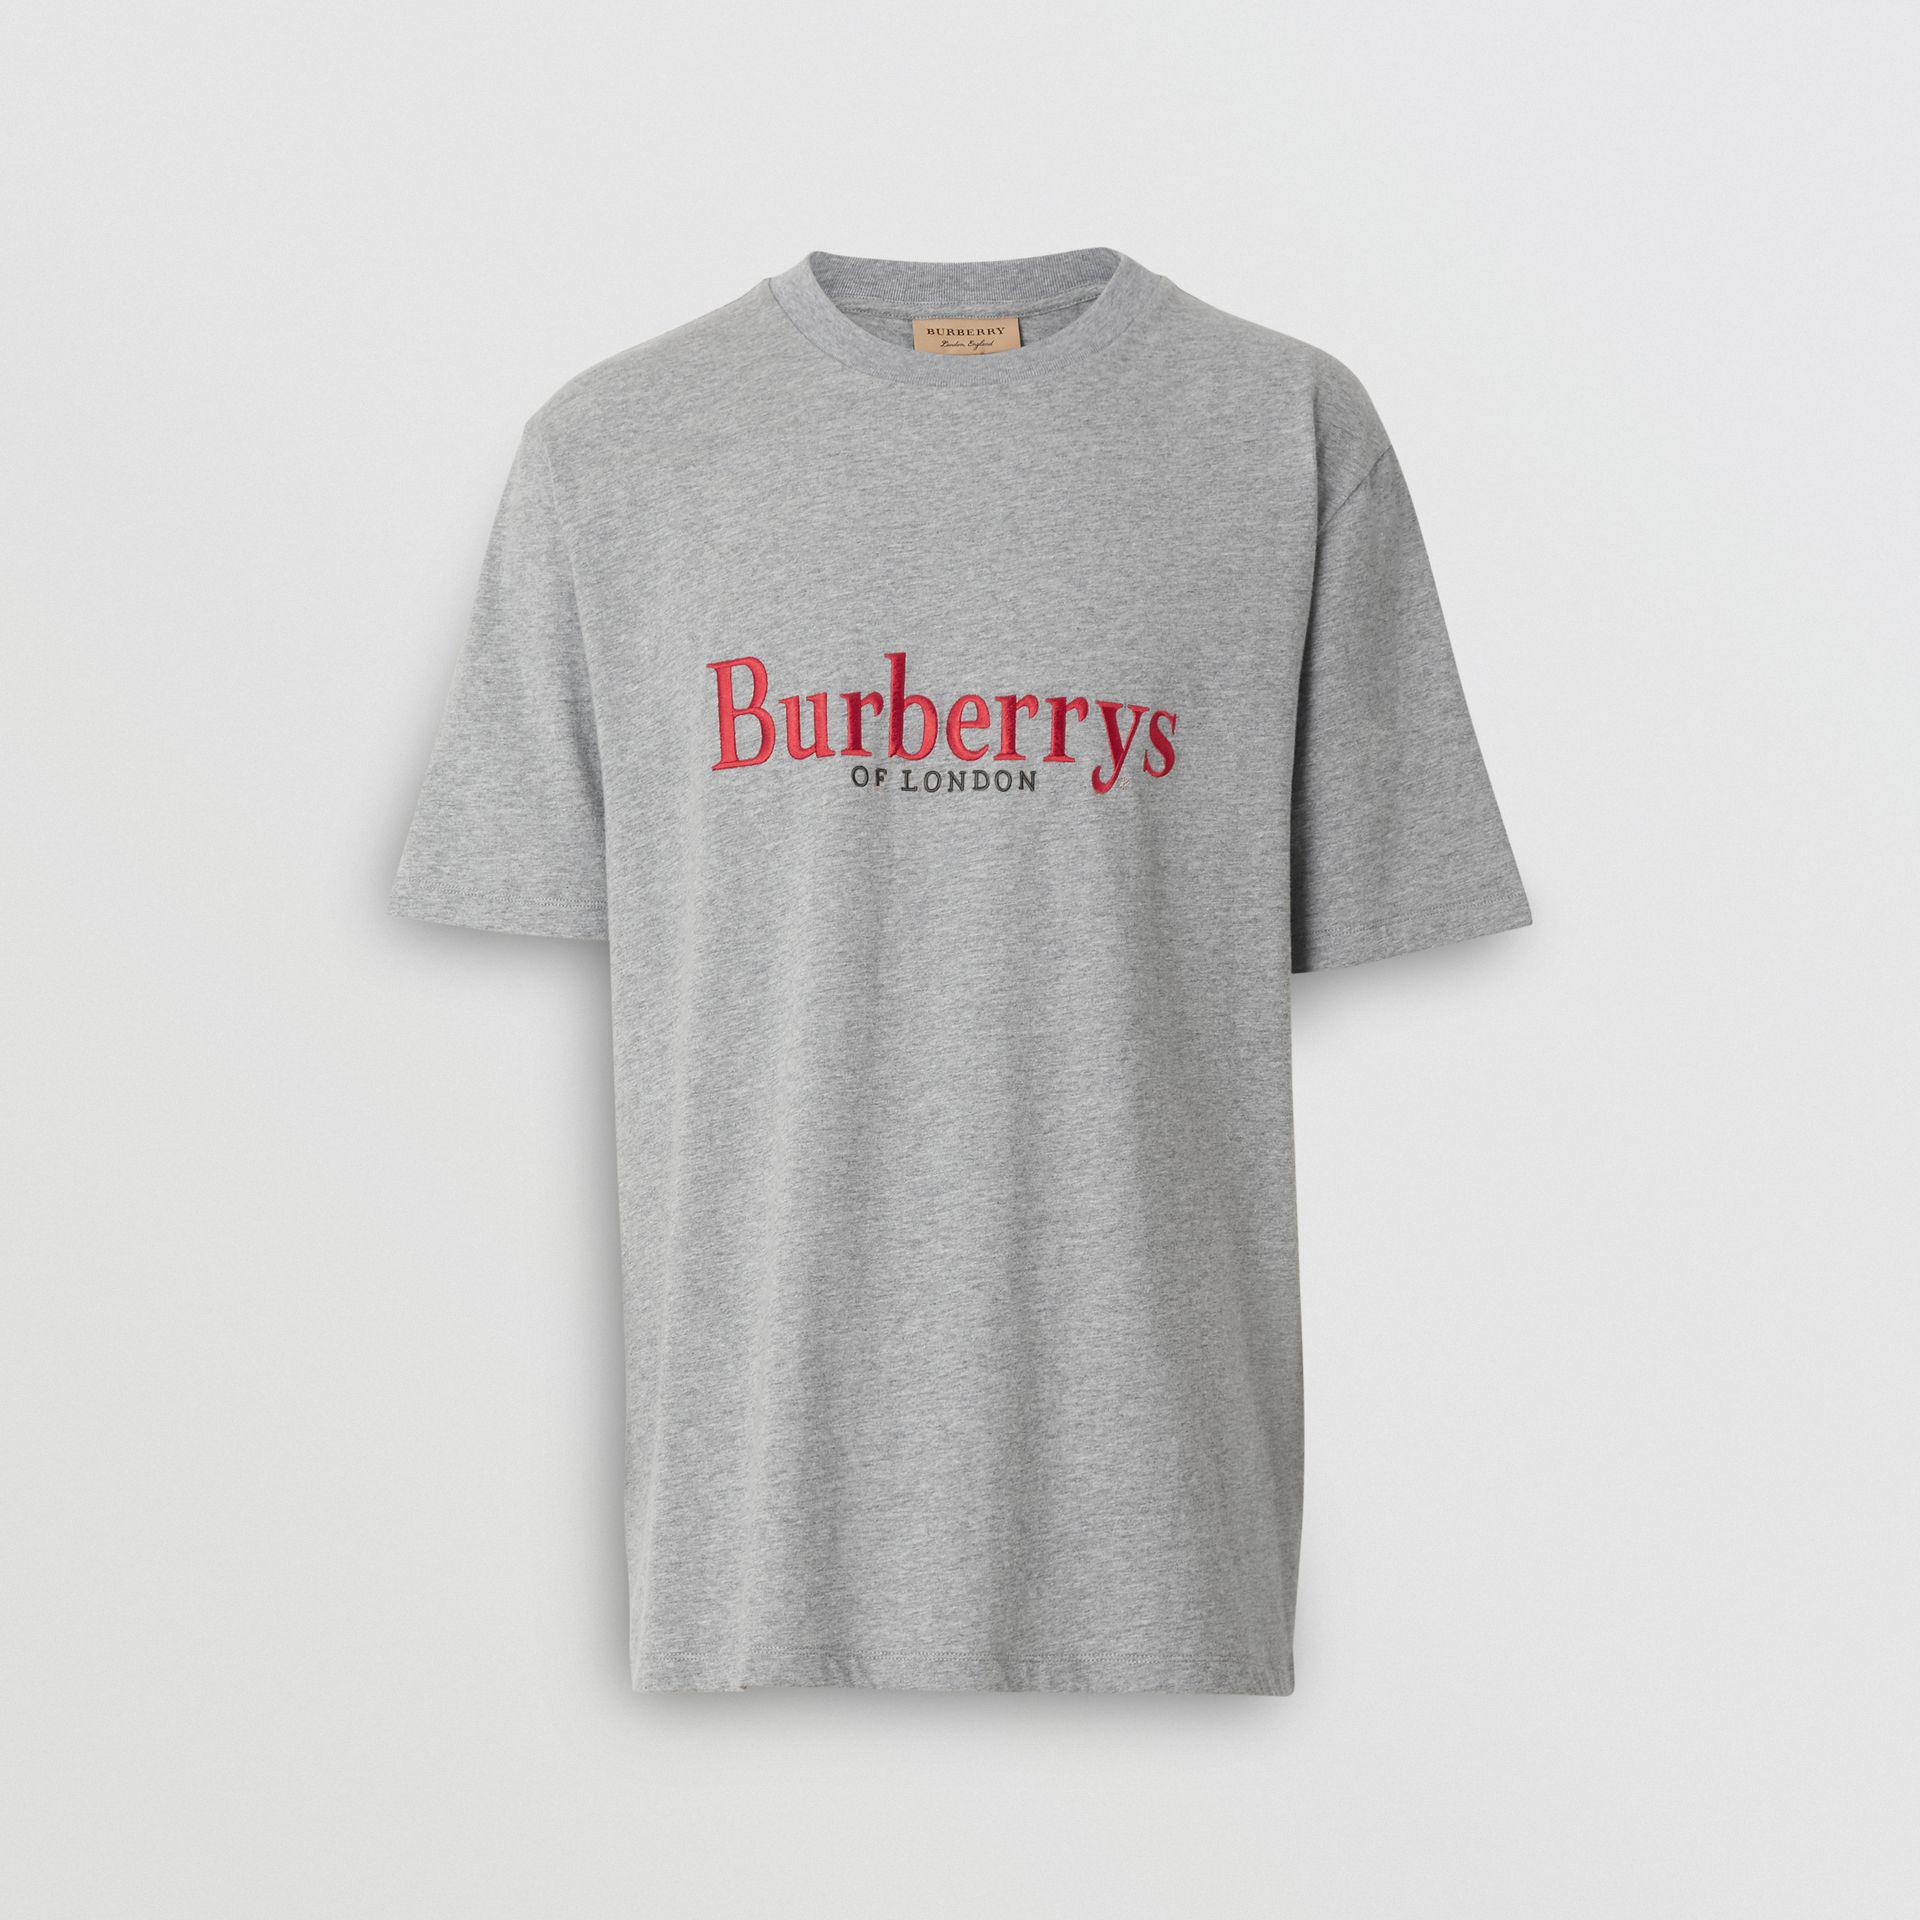 Burberry Embroidered T Shirt Shop, 55% OFF | www.ingeniovirtual.com